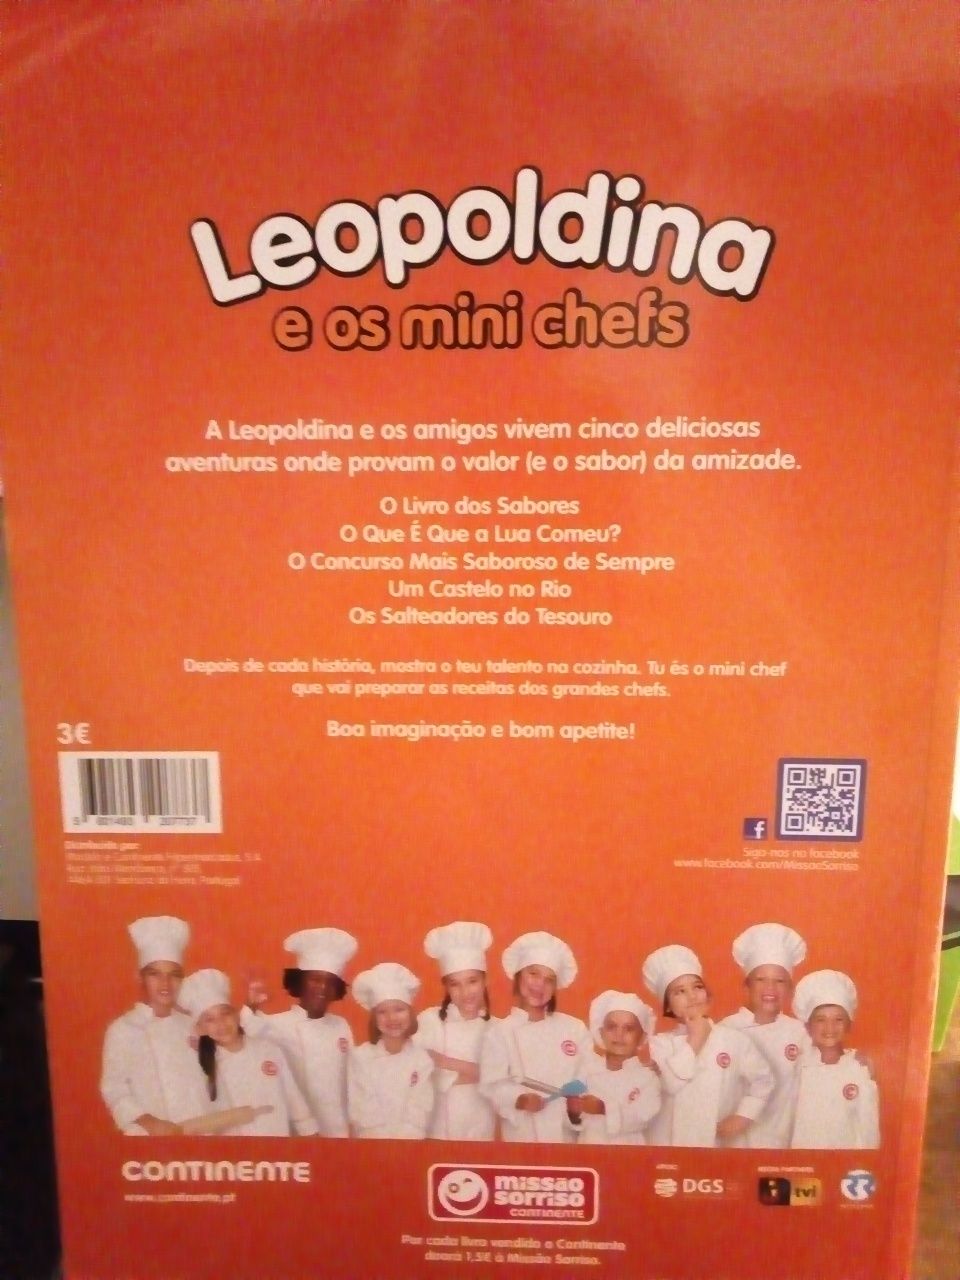 Leopoldina e os mini chefs